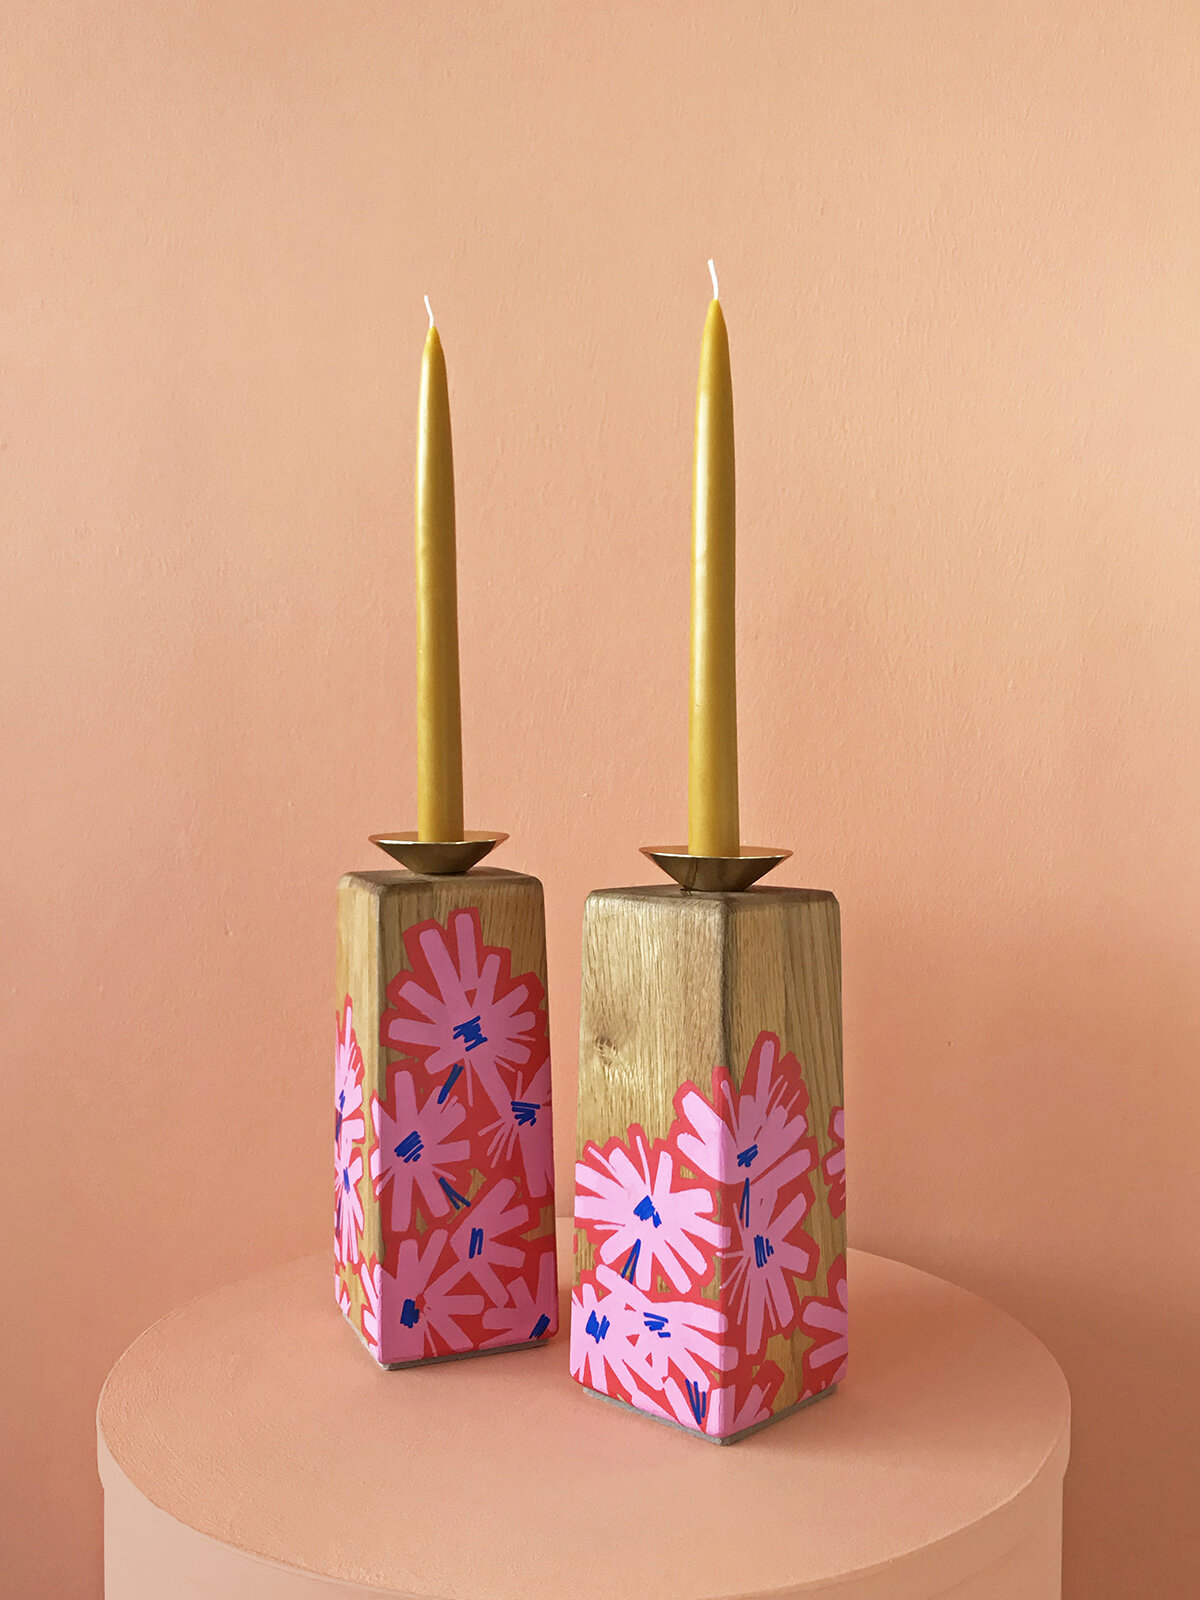 Pink daisy candlesticks by Zoe Murphy.jpg